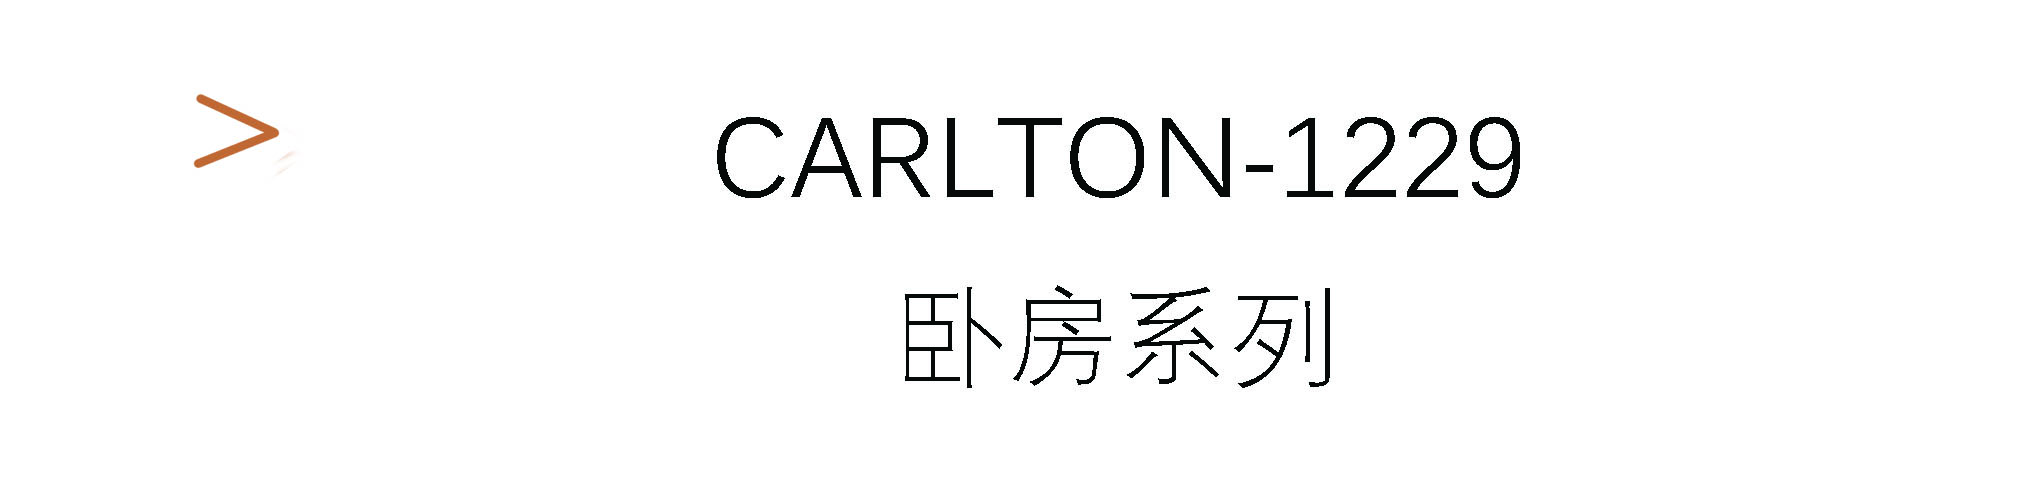 Carlton-1229